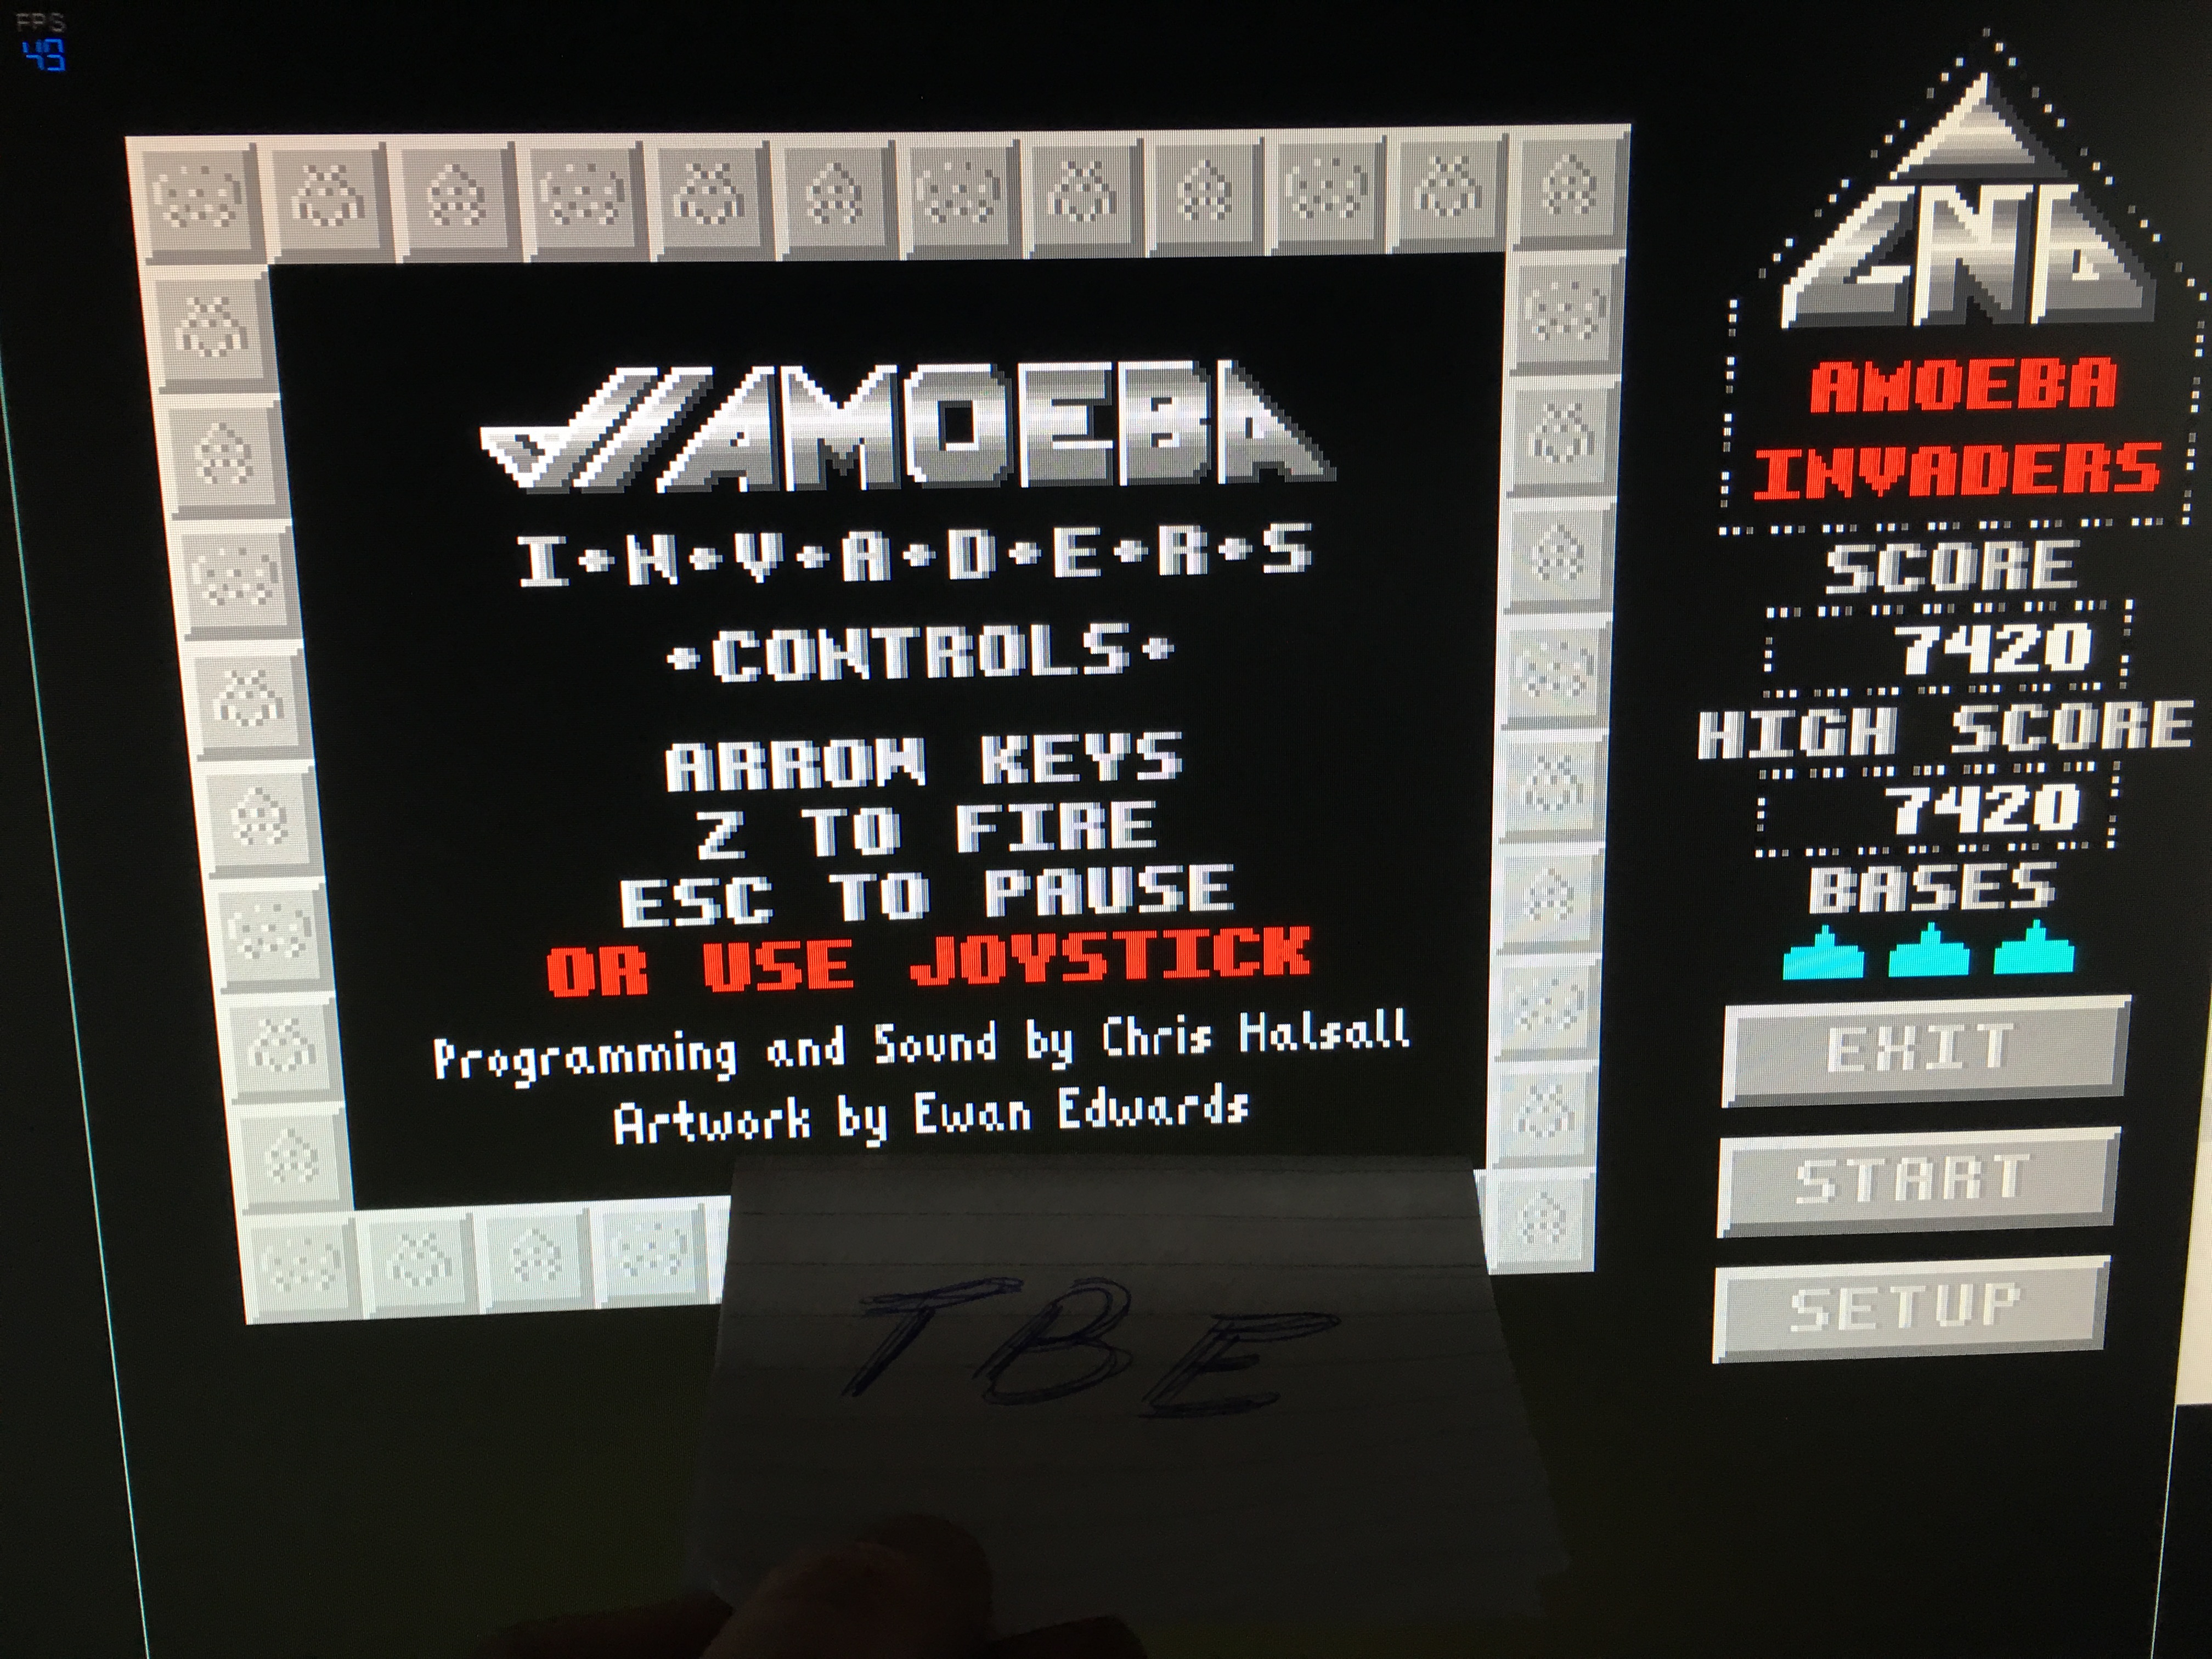 Sixx: Amoeba Invaders (Amiga Emulated) 7,420 points on 2016-06-04 16:36:48